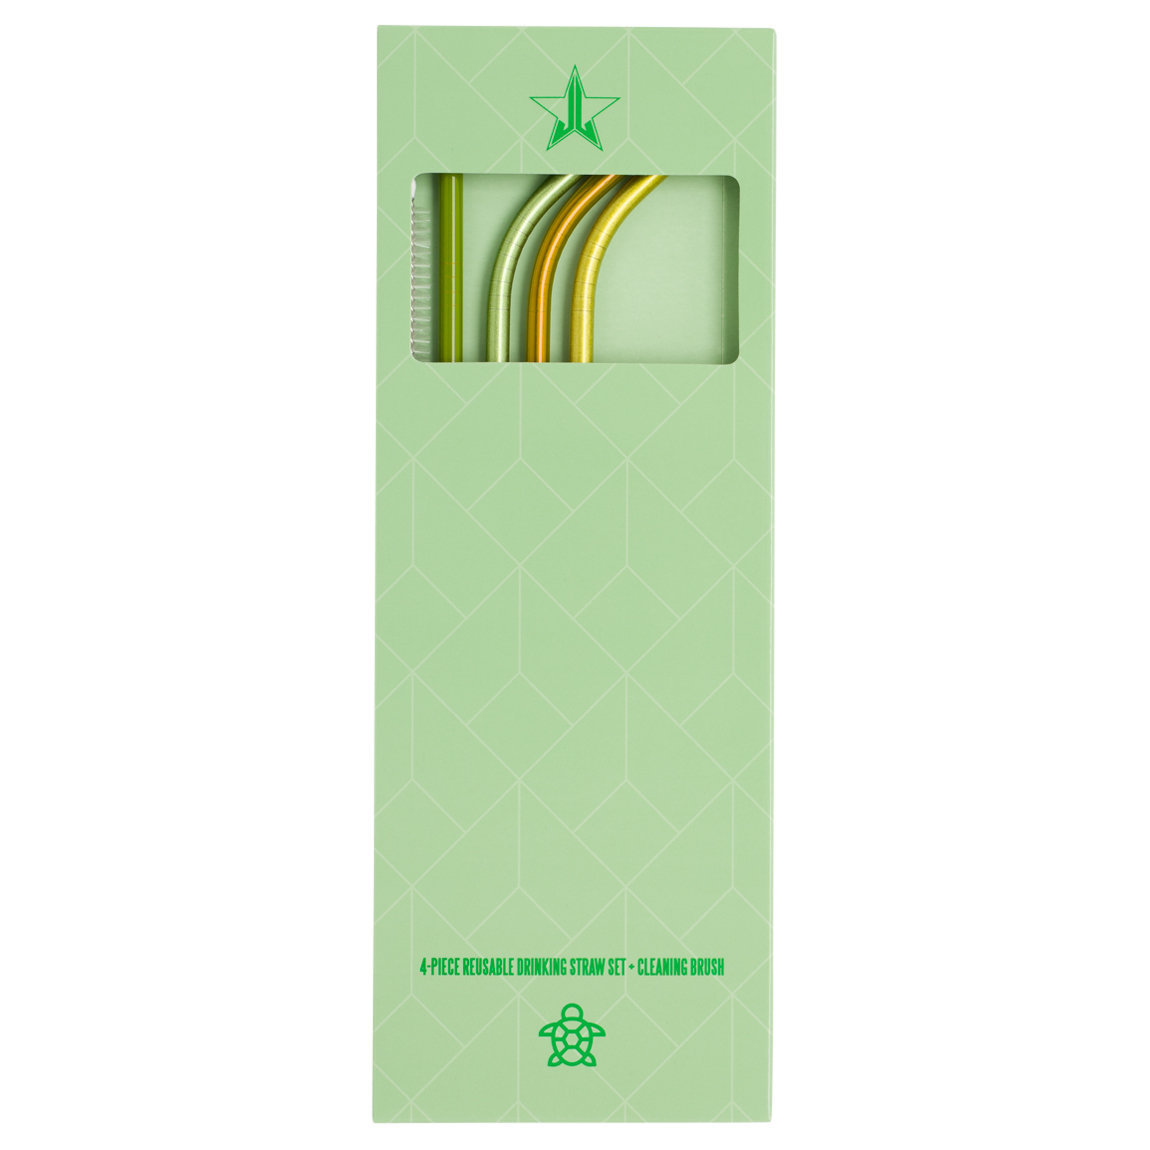 Jeffree Star Cosmetics Metal Straw 4-Pack Green alternative view 1 - product swatch.